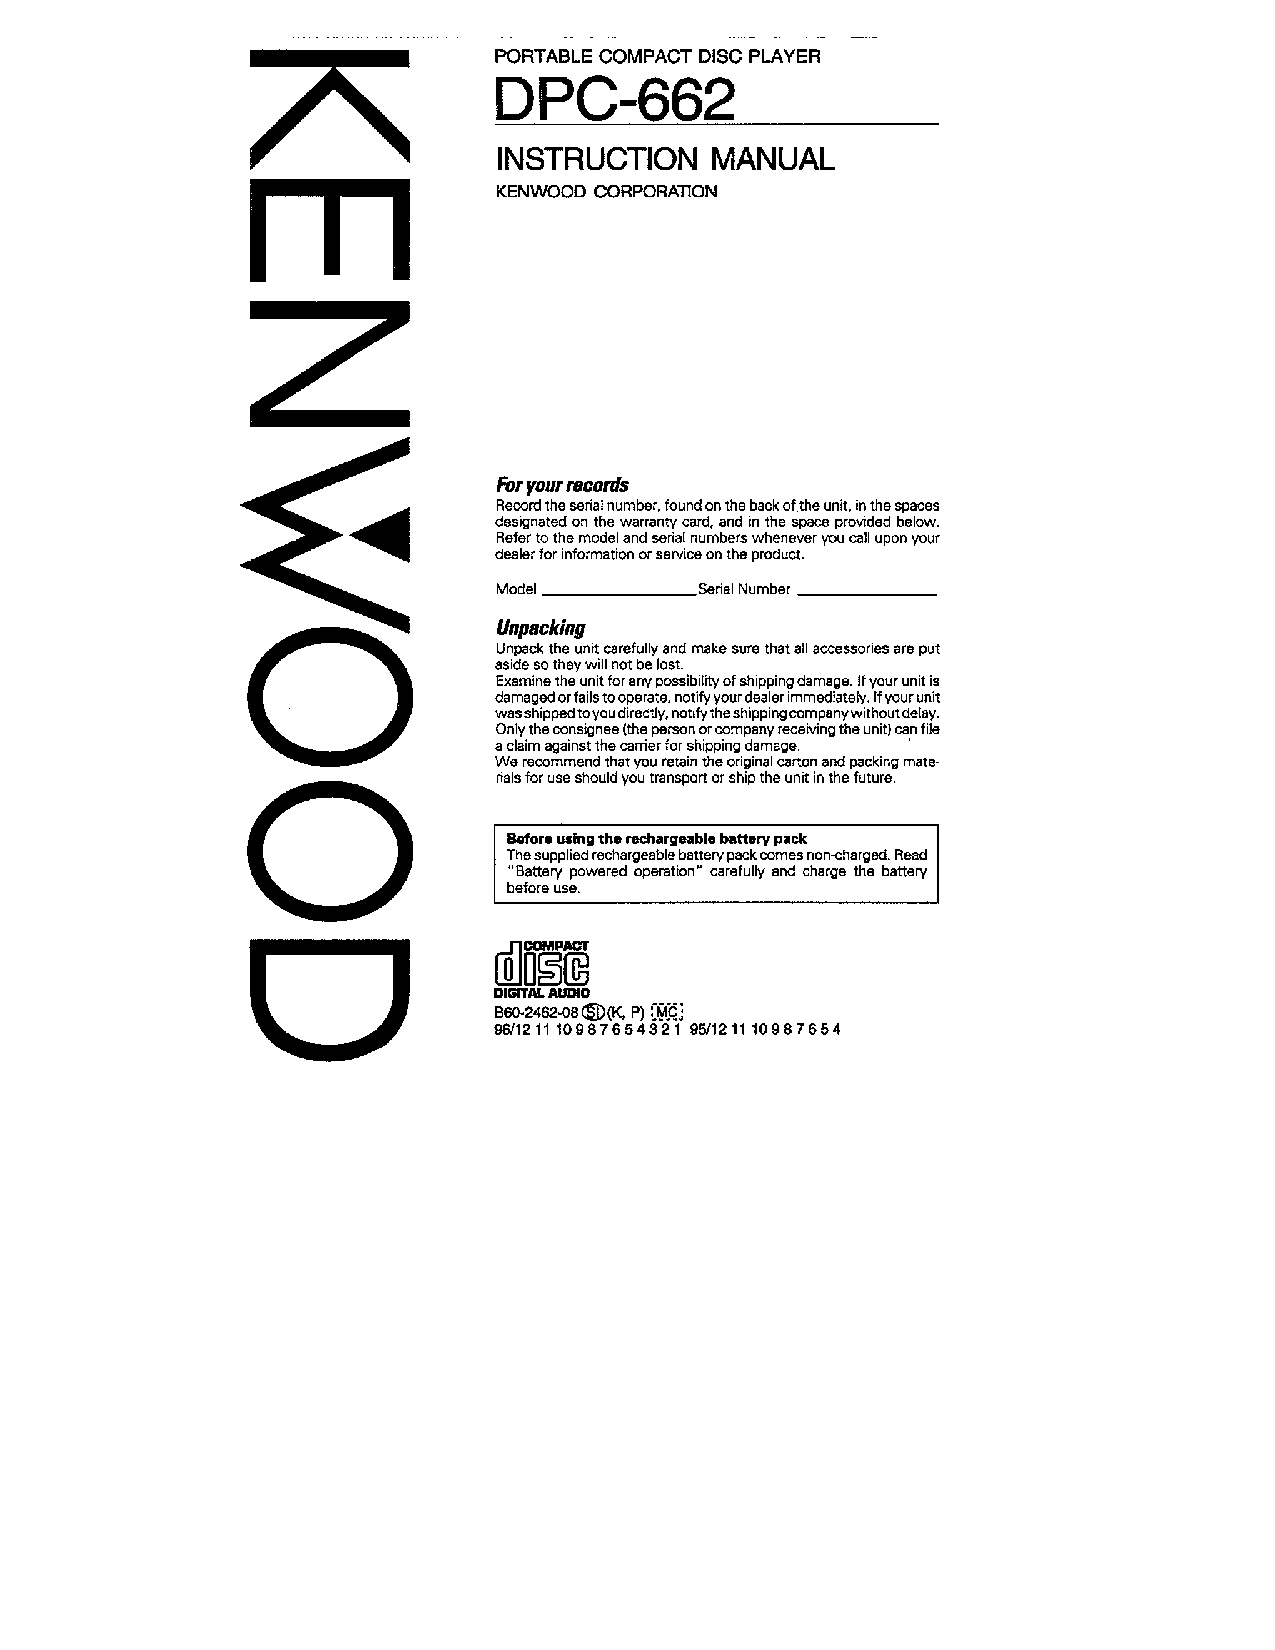 Kenwood DPC-662 User Manual